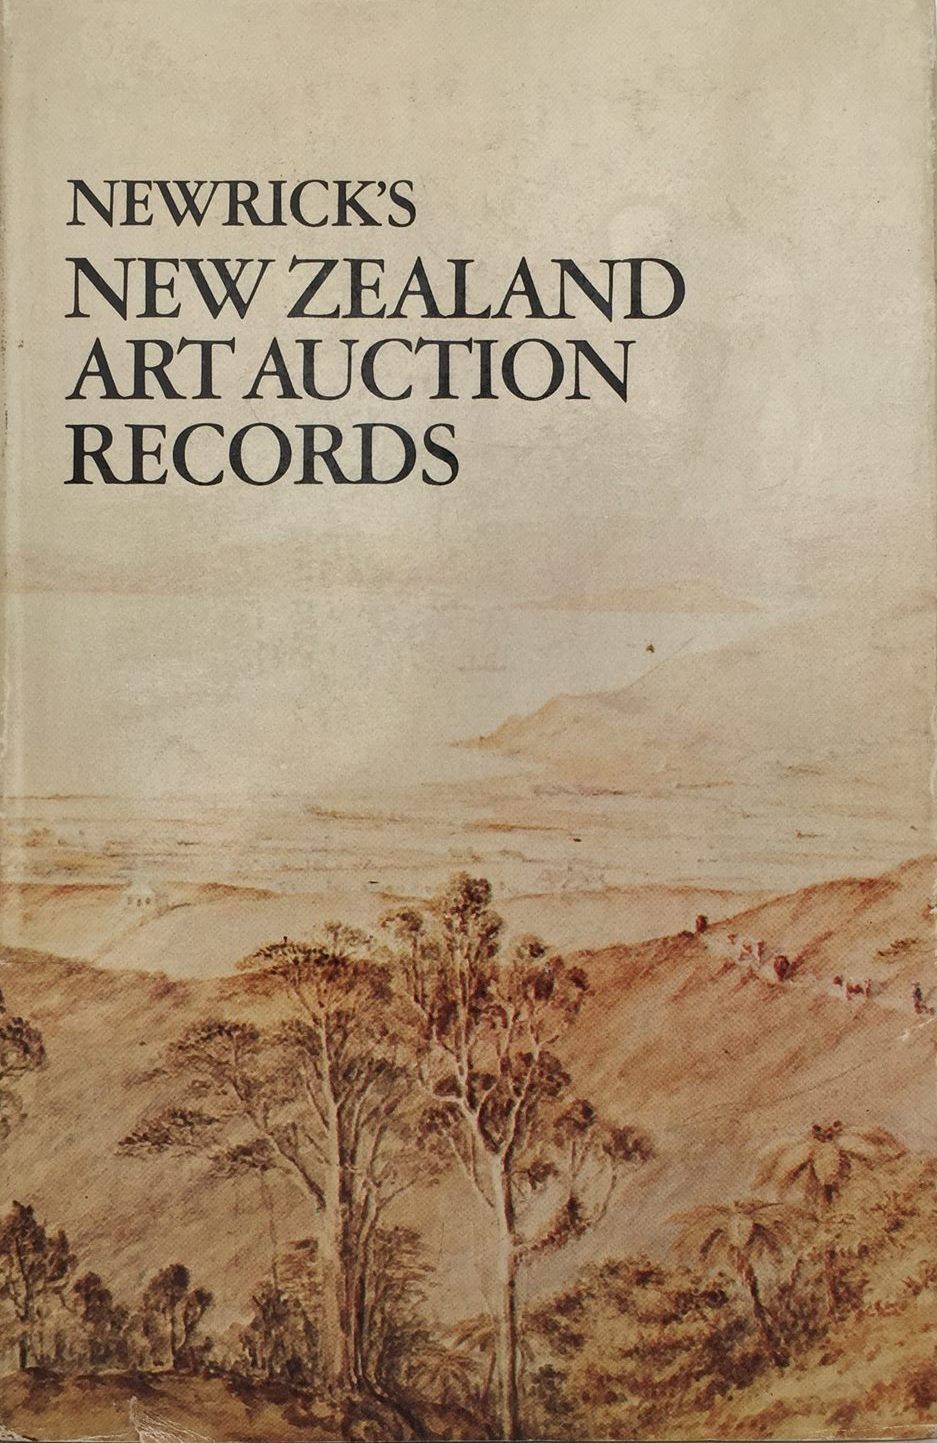 Newrick's New Zealand Art Auction Records